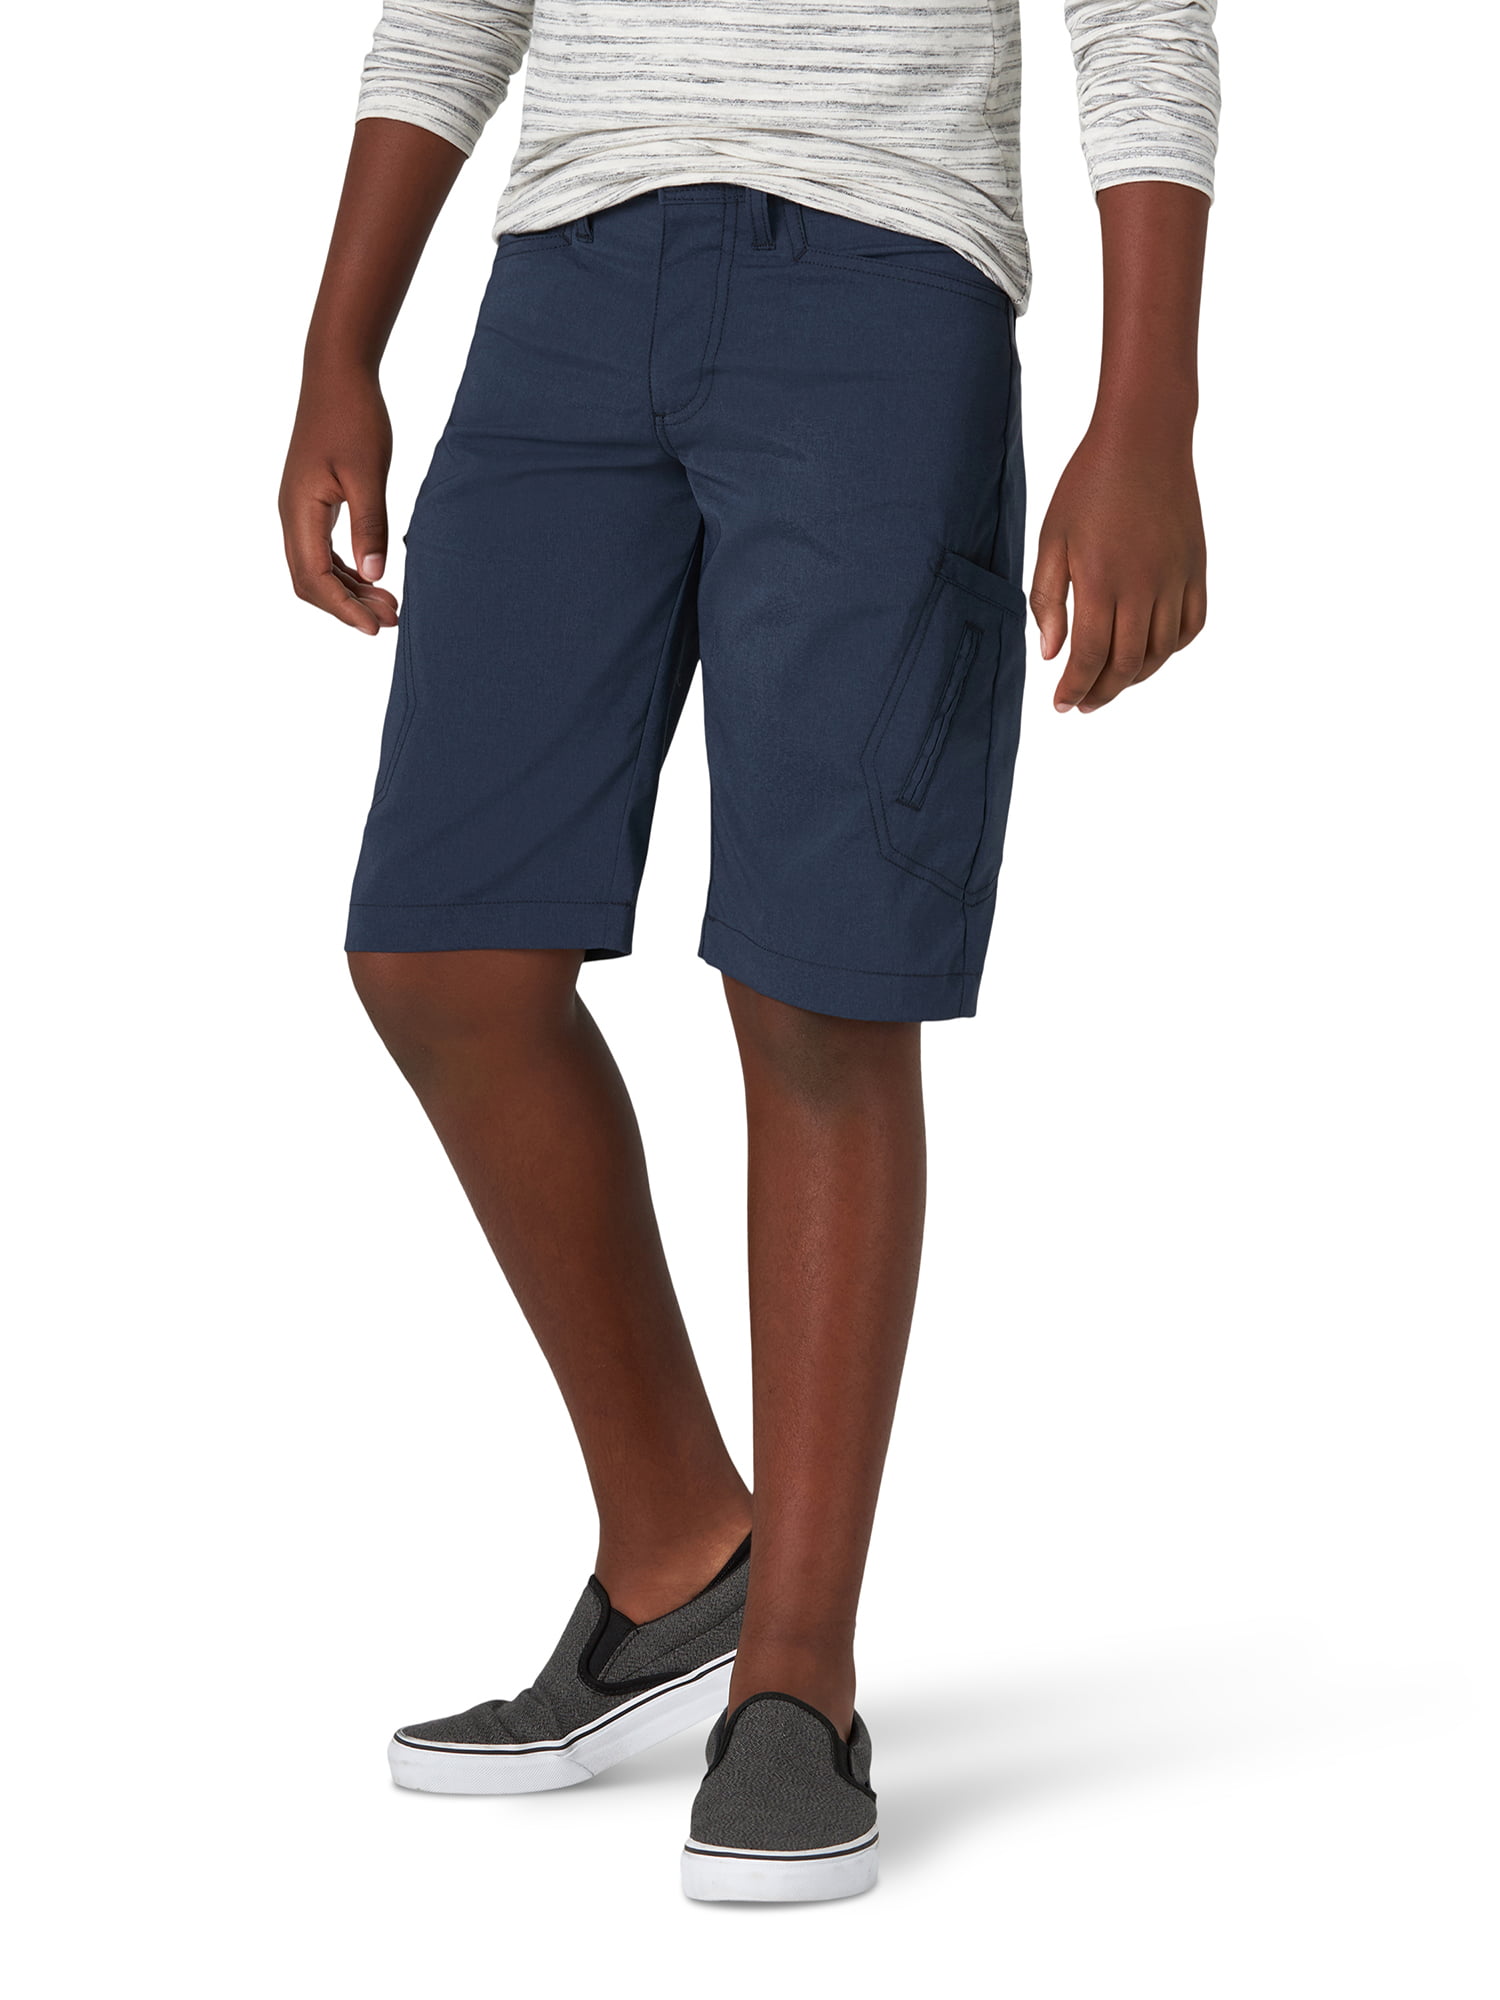 Lee Boys Grafton Shorts, Sizes 4-18 & Husky - Walmart.com